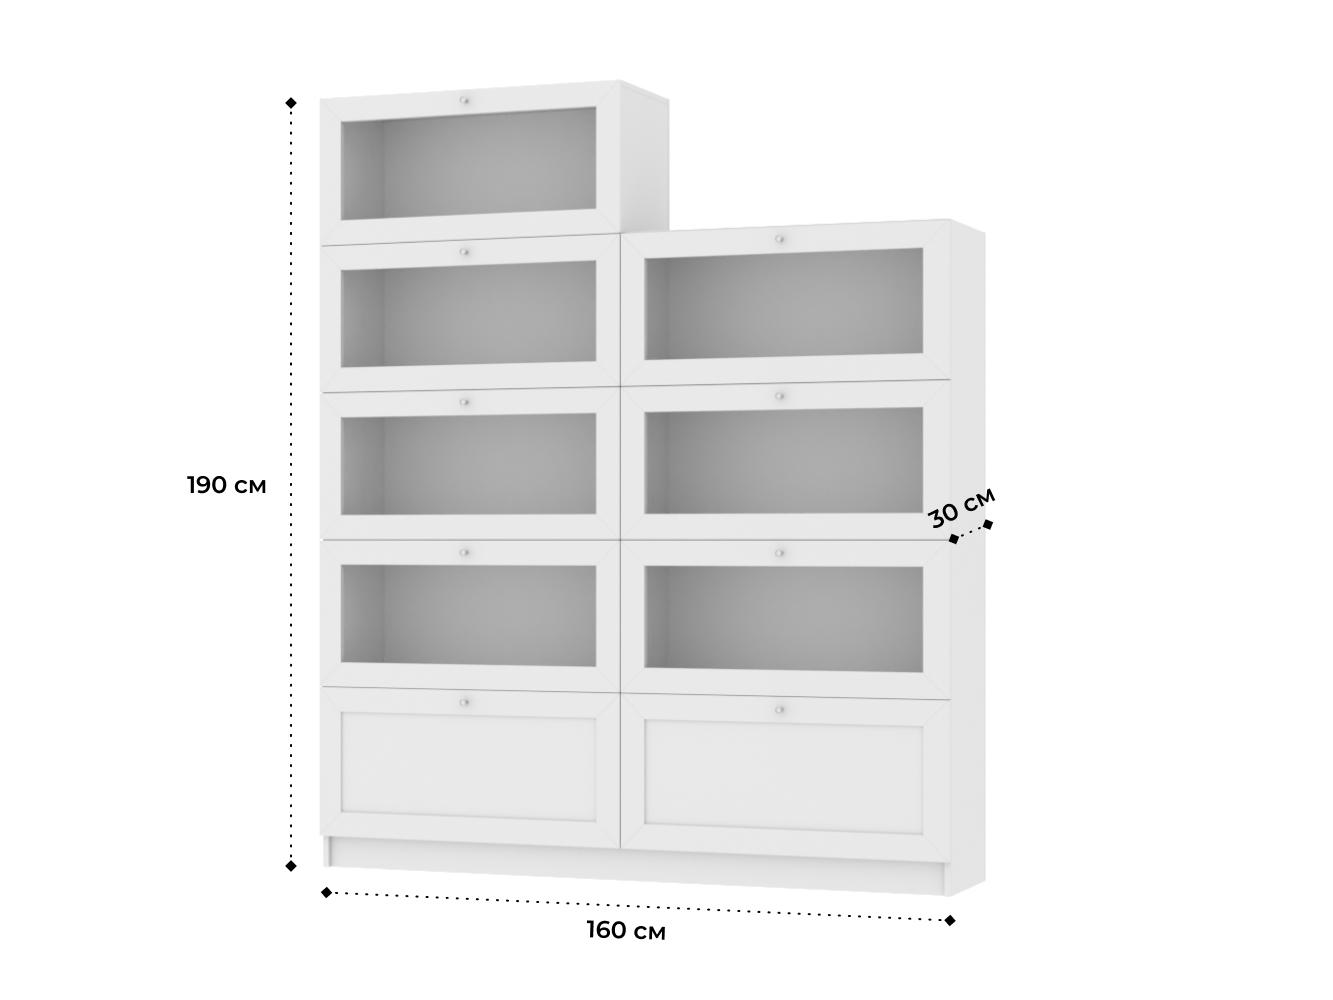 Книжный шкаф Билли 426 white ИКЕА (IKEA) изображение товара